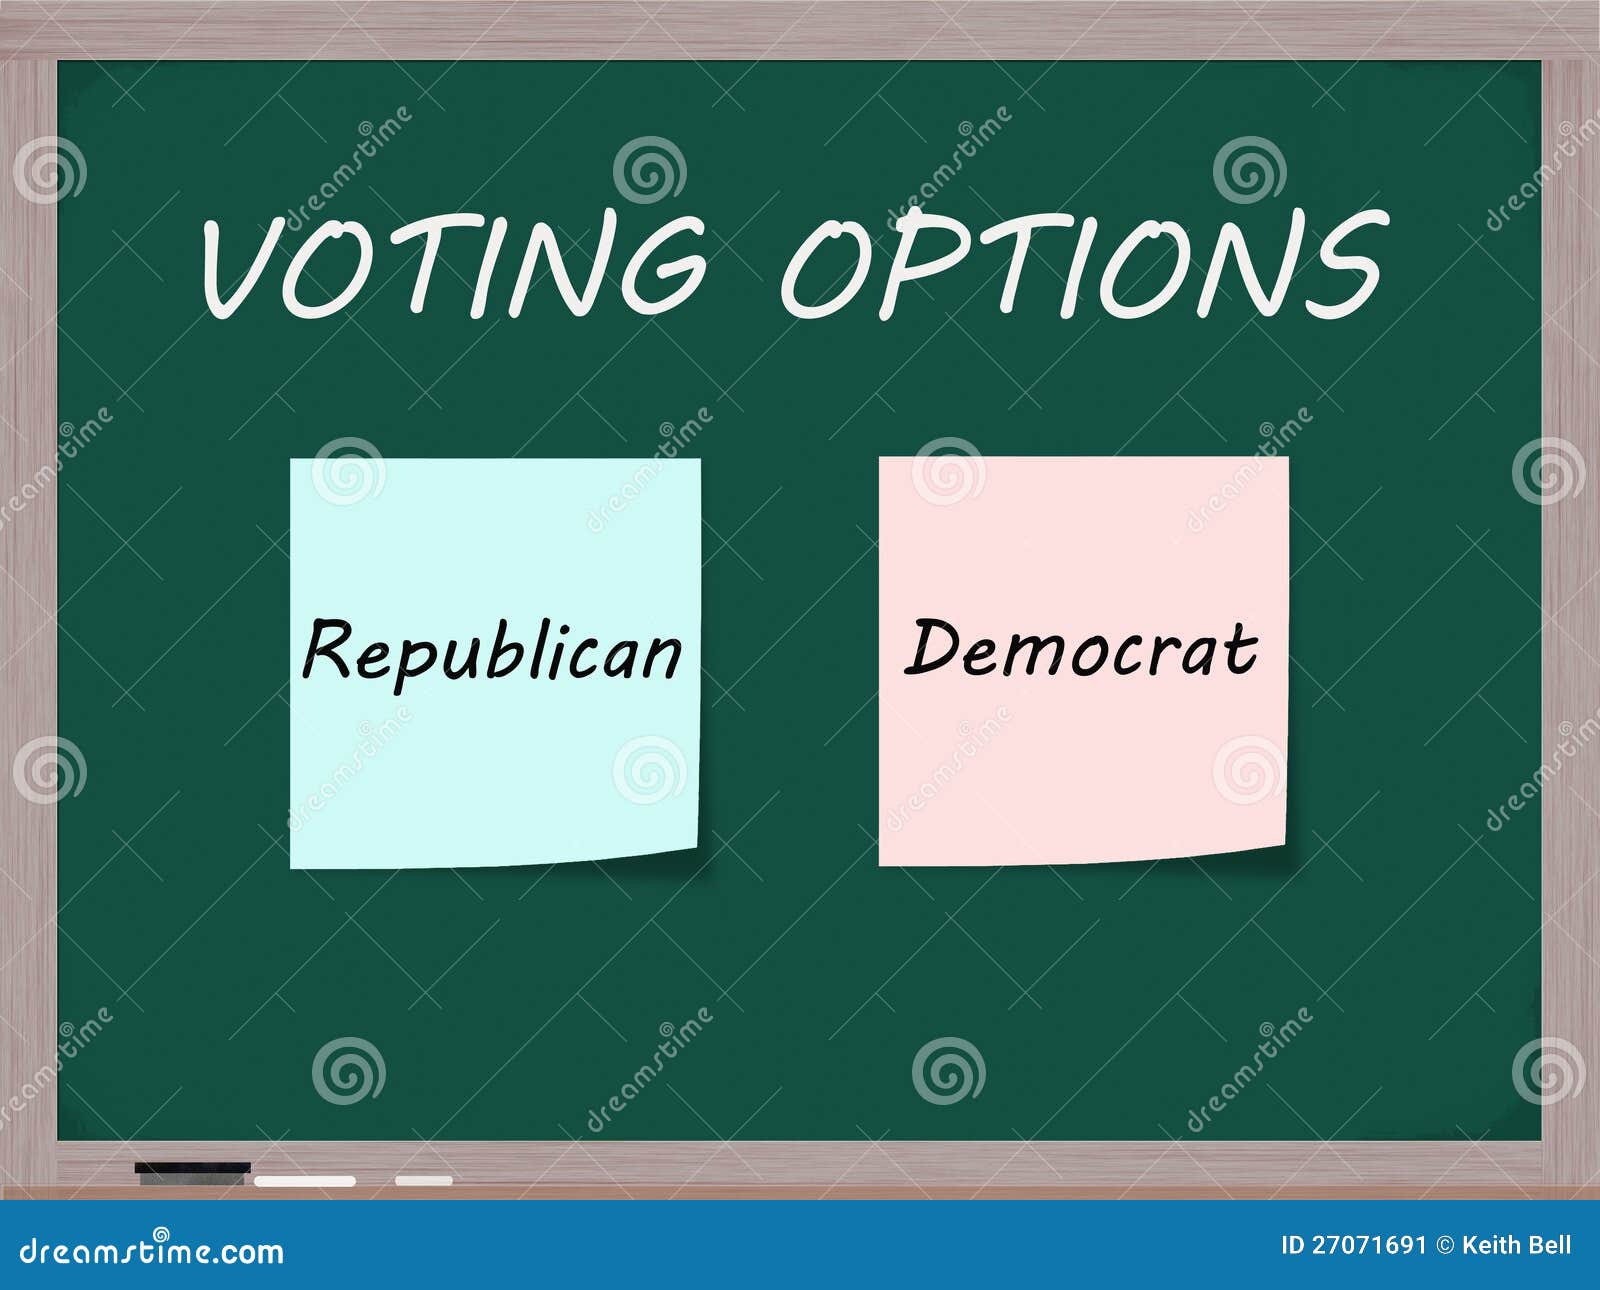 voting options on blackboard